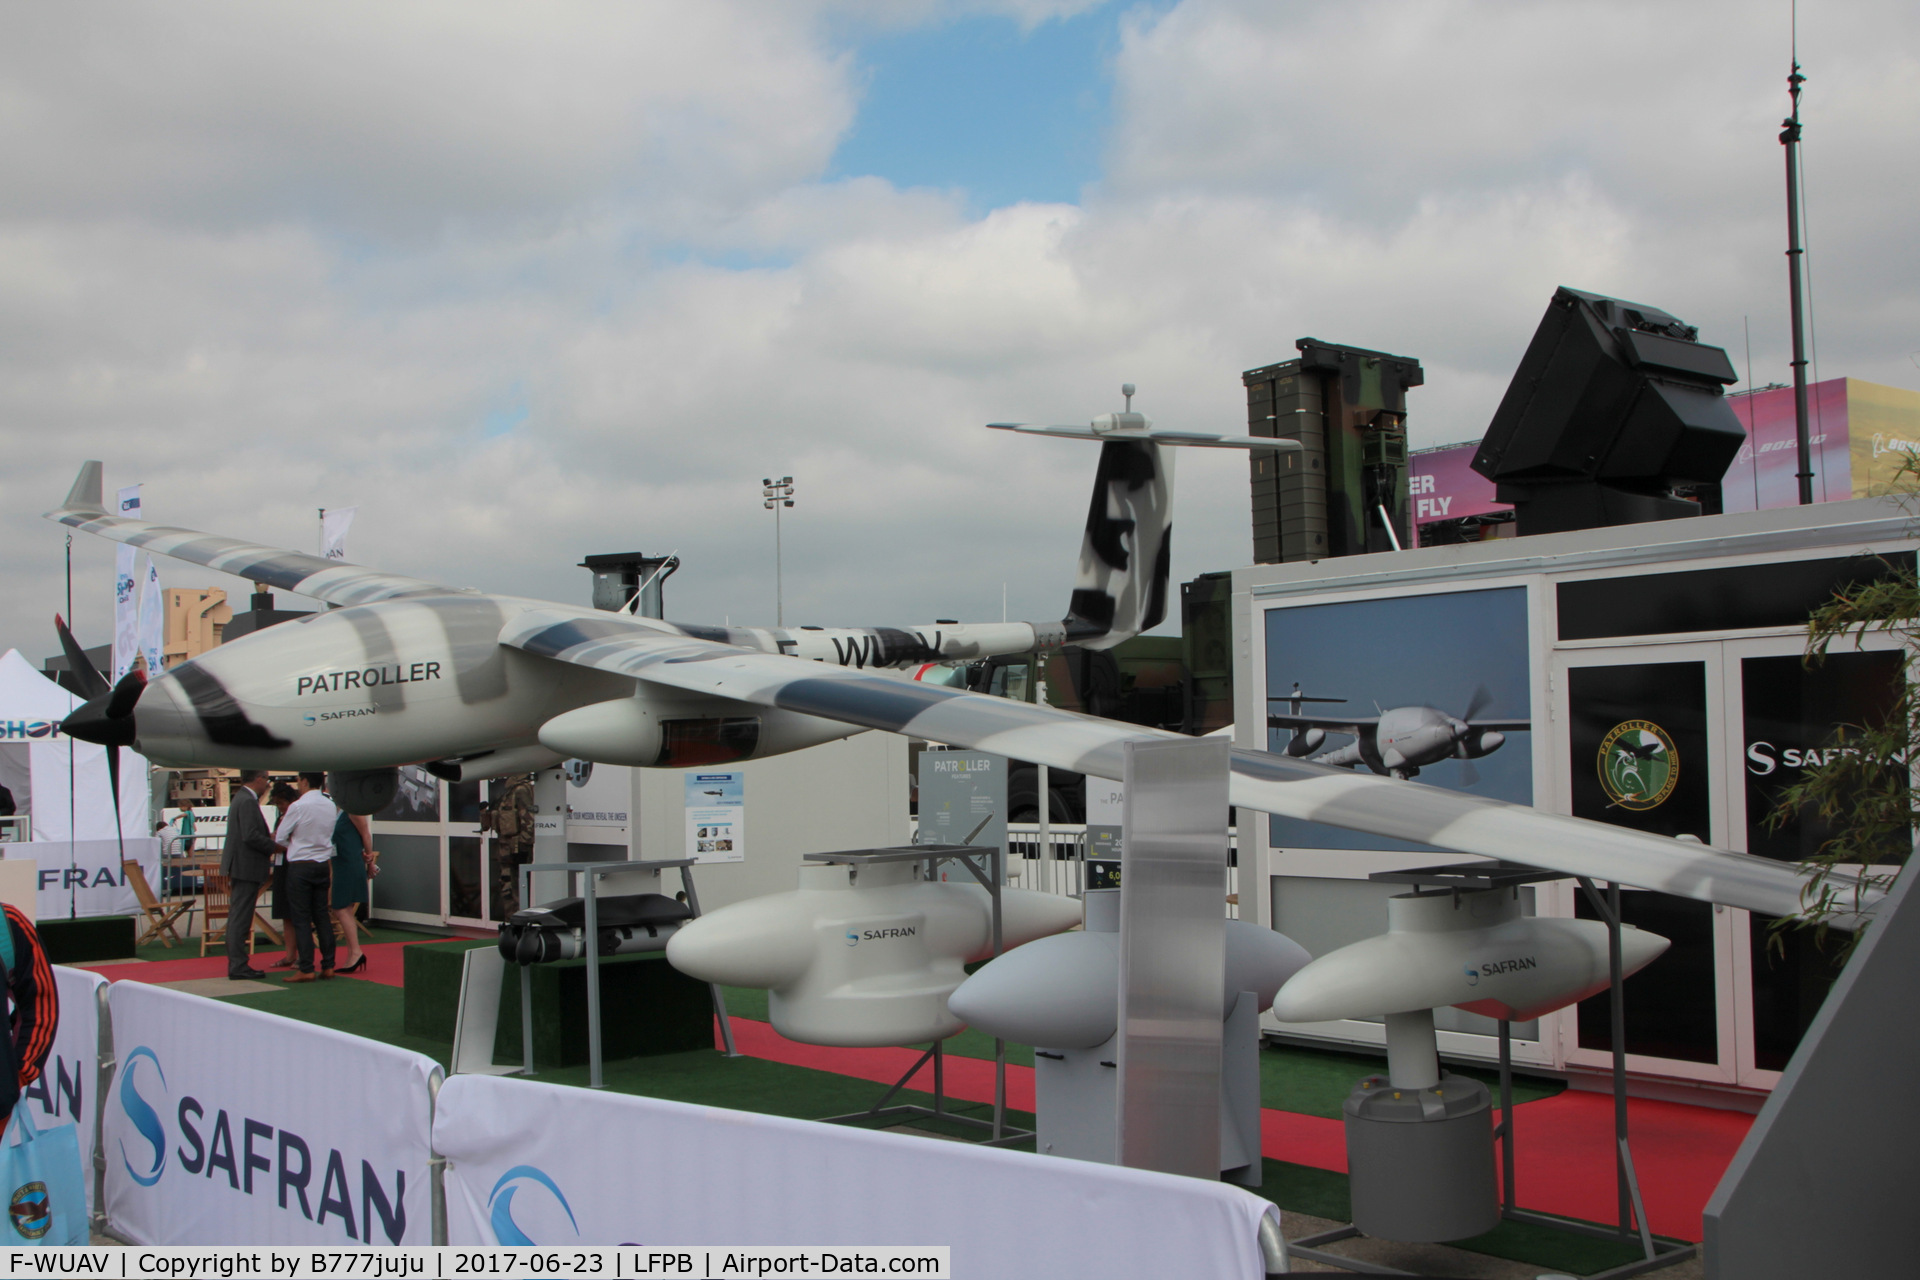 F-WUAV, 2009 Sagem S15 UAV Patroller V1 C/N 005, on display at SIAE 2017